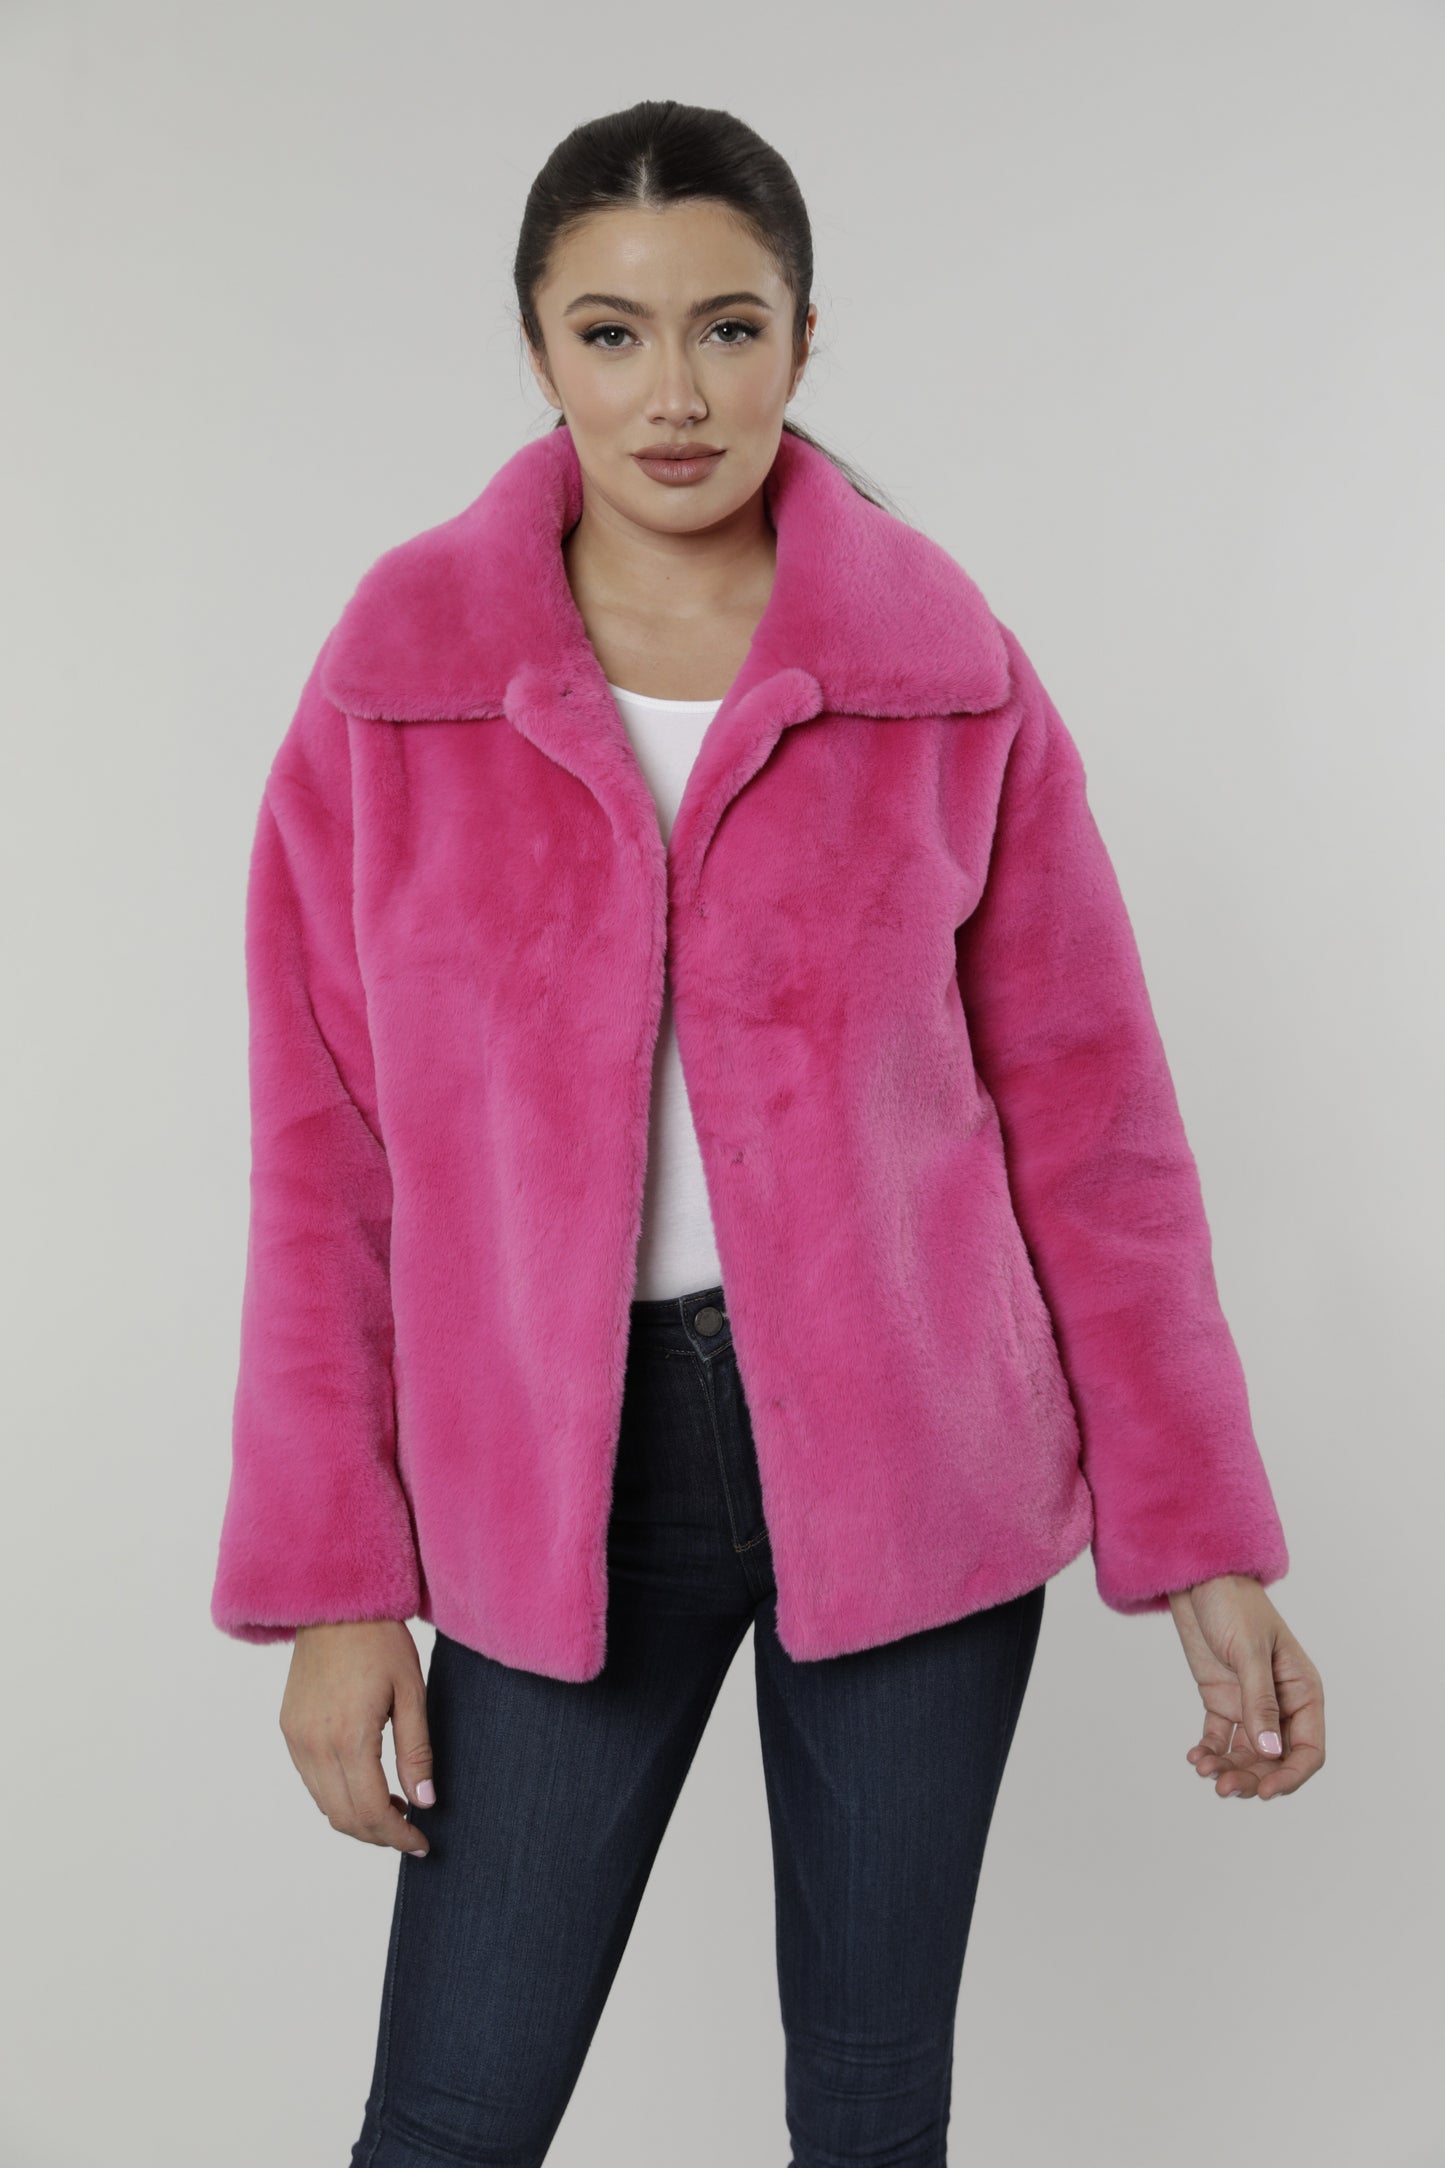 Dolce Cabo Oversized Blush Pink Fur Jacket Blush / XL